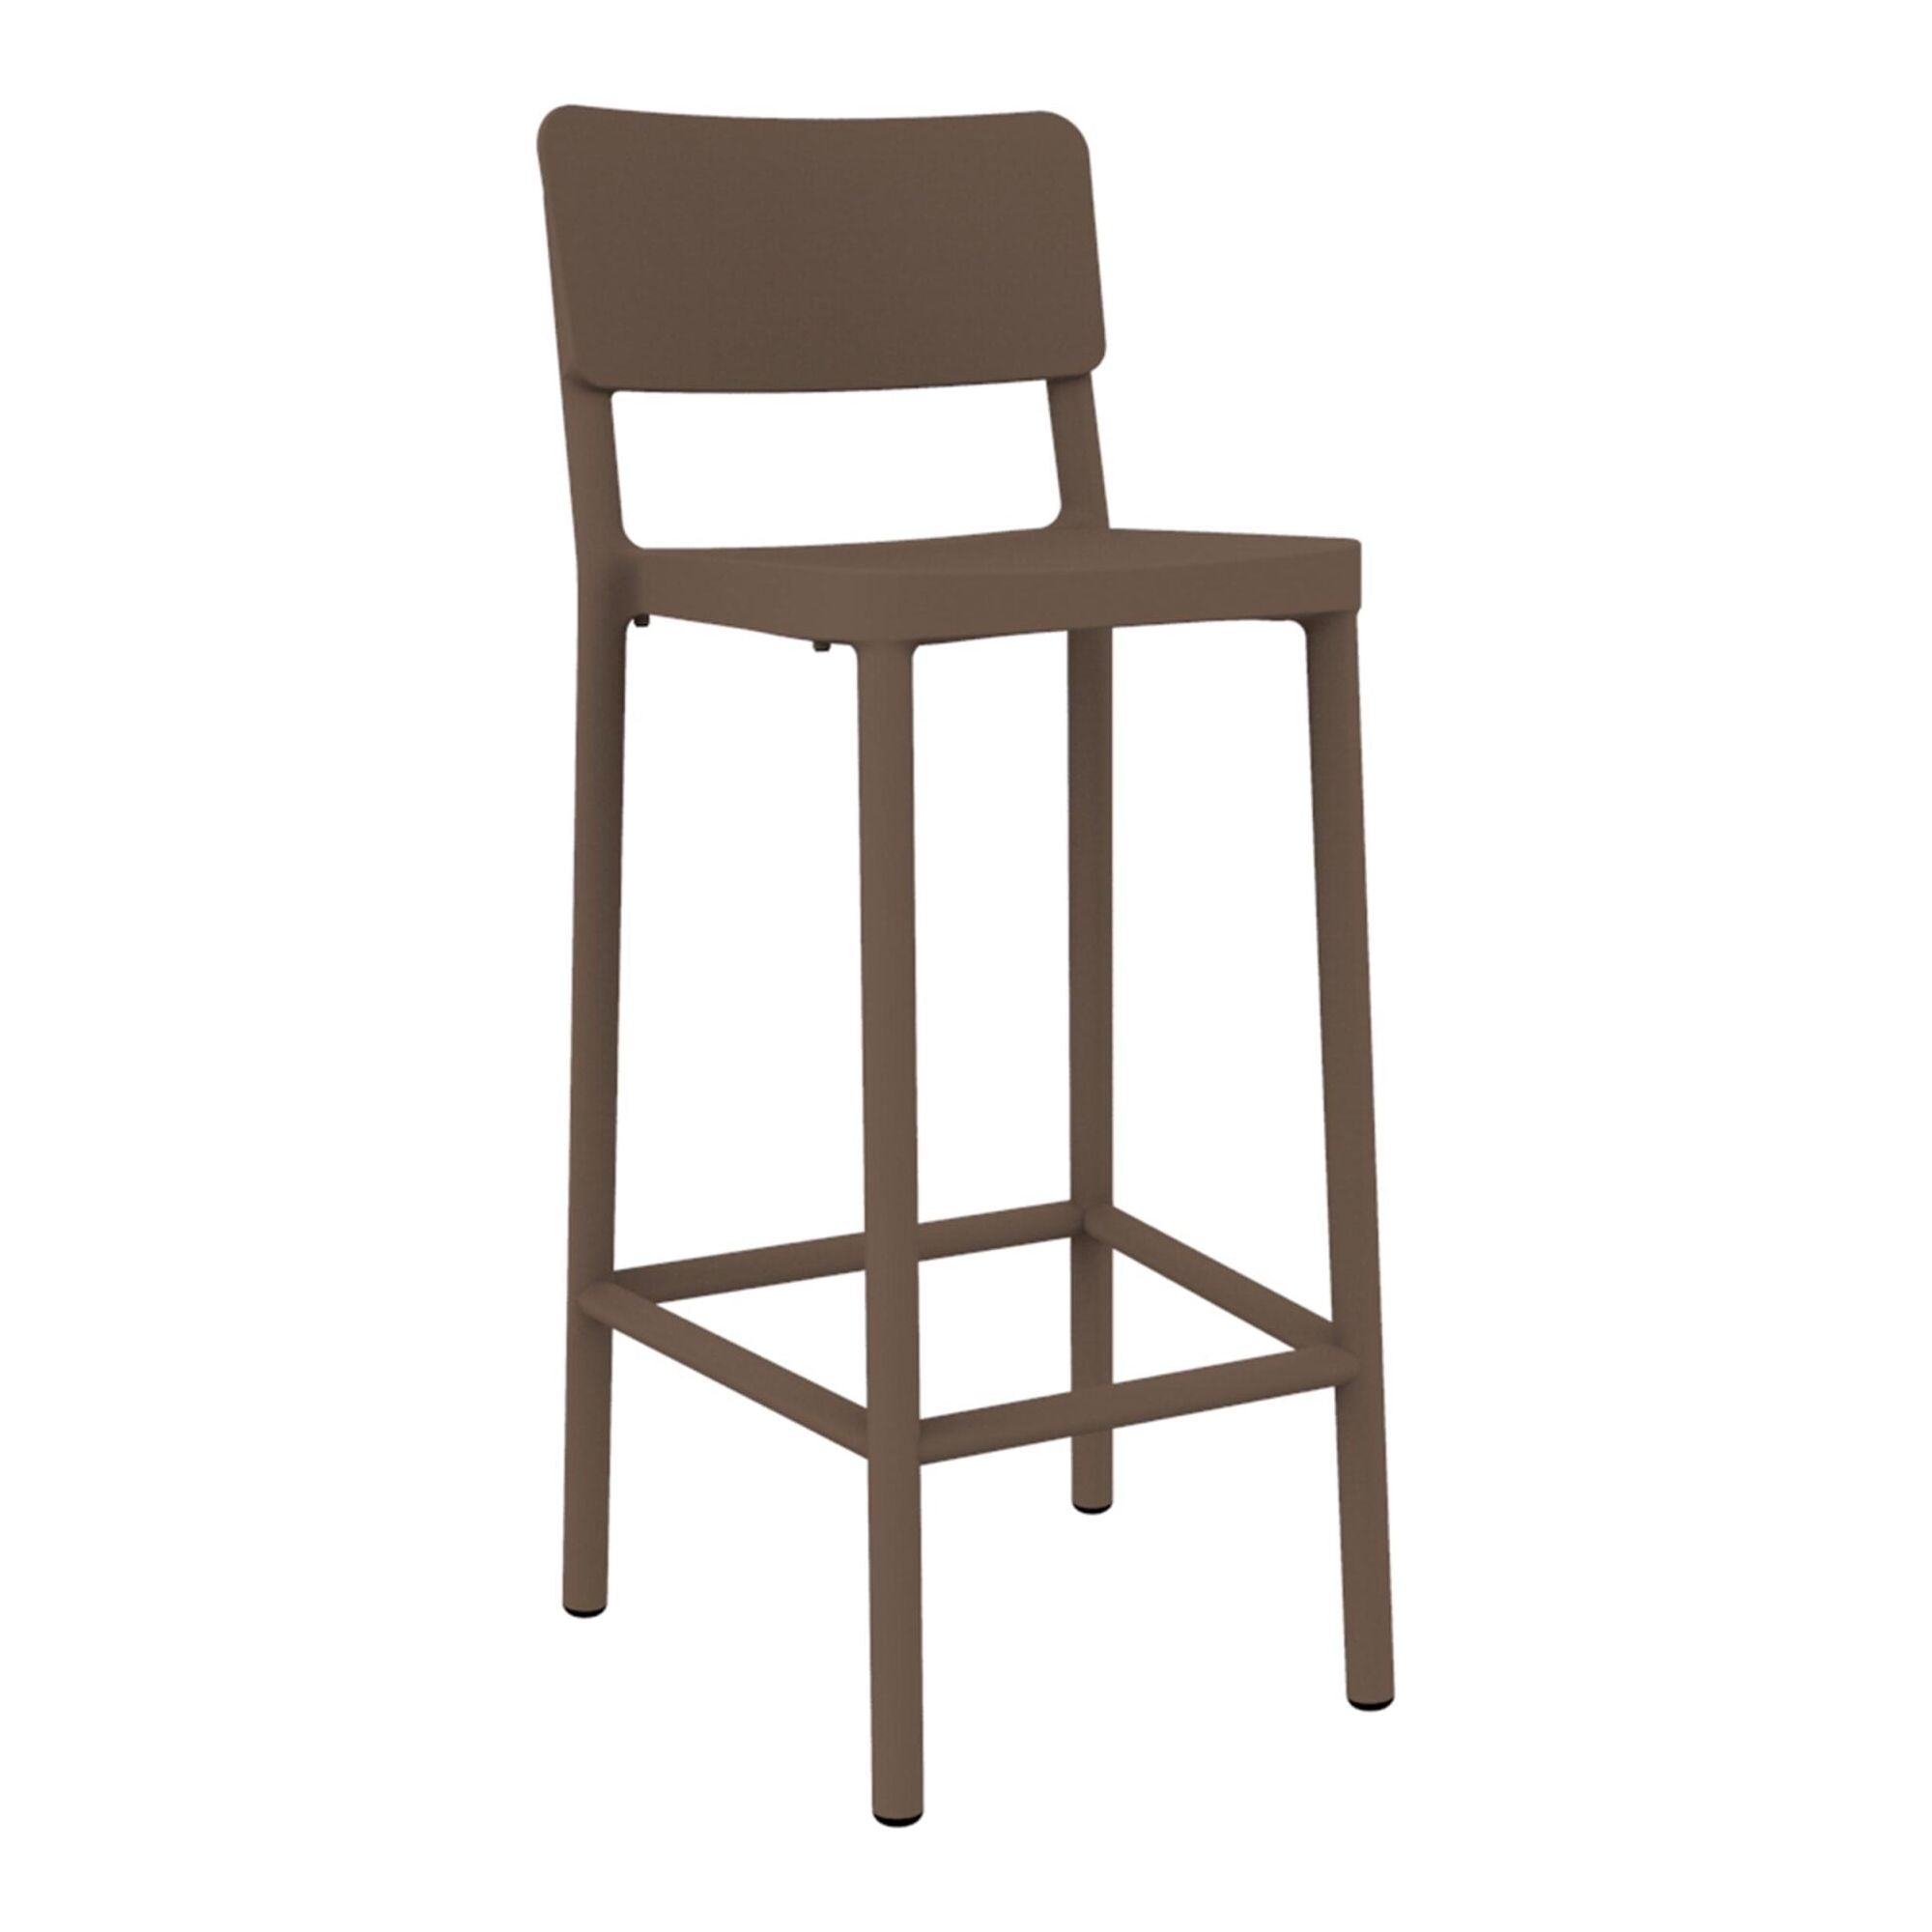 Resol lisboa high chair indoors, chocolate outdoors